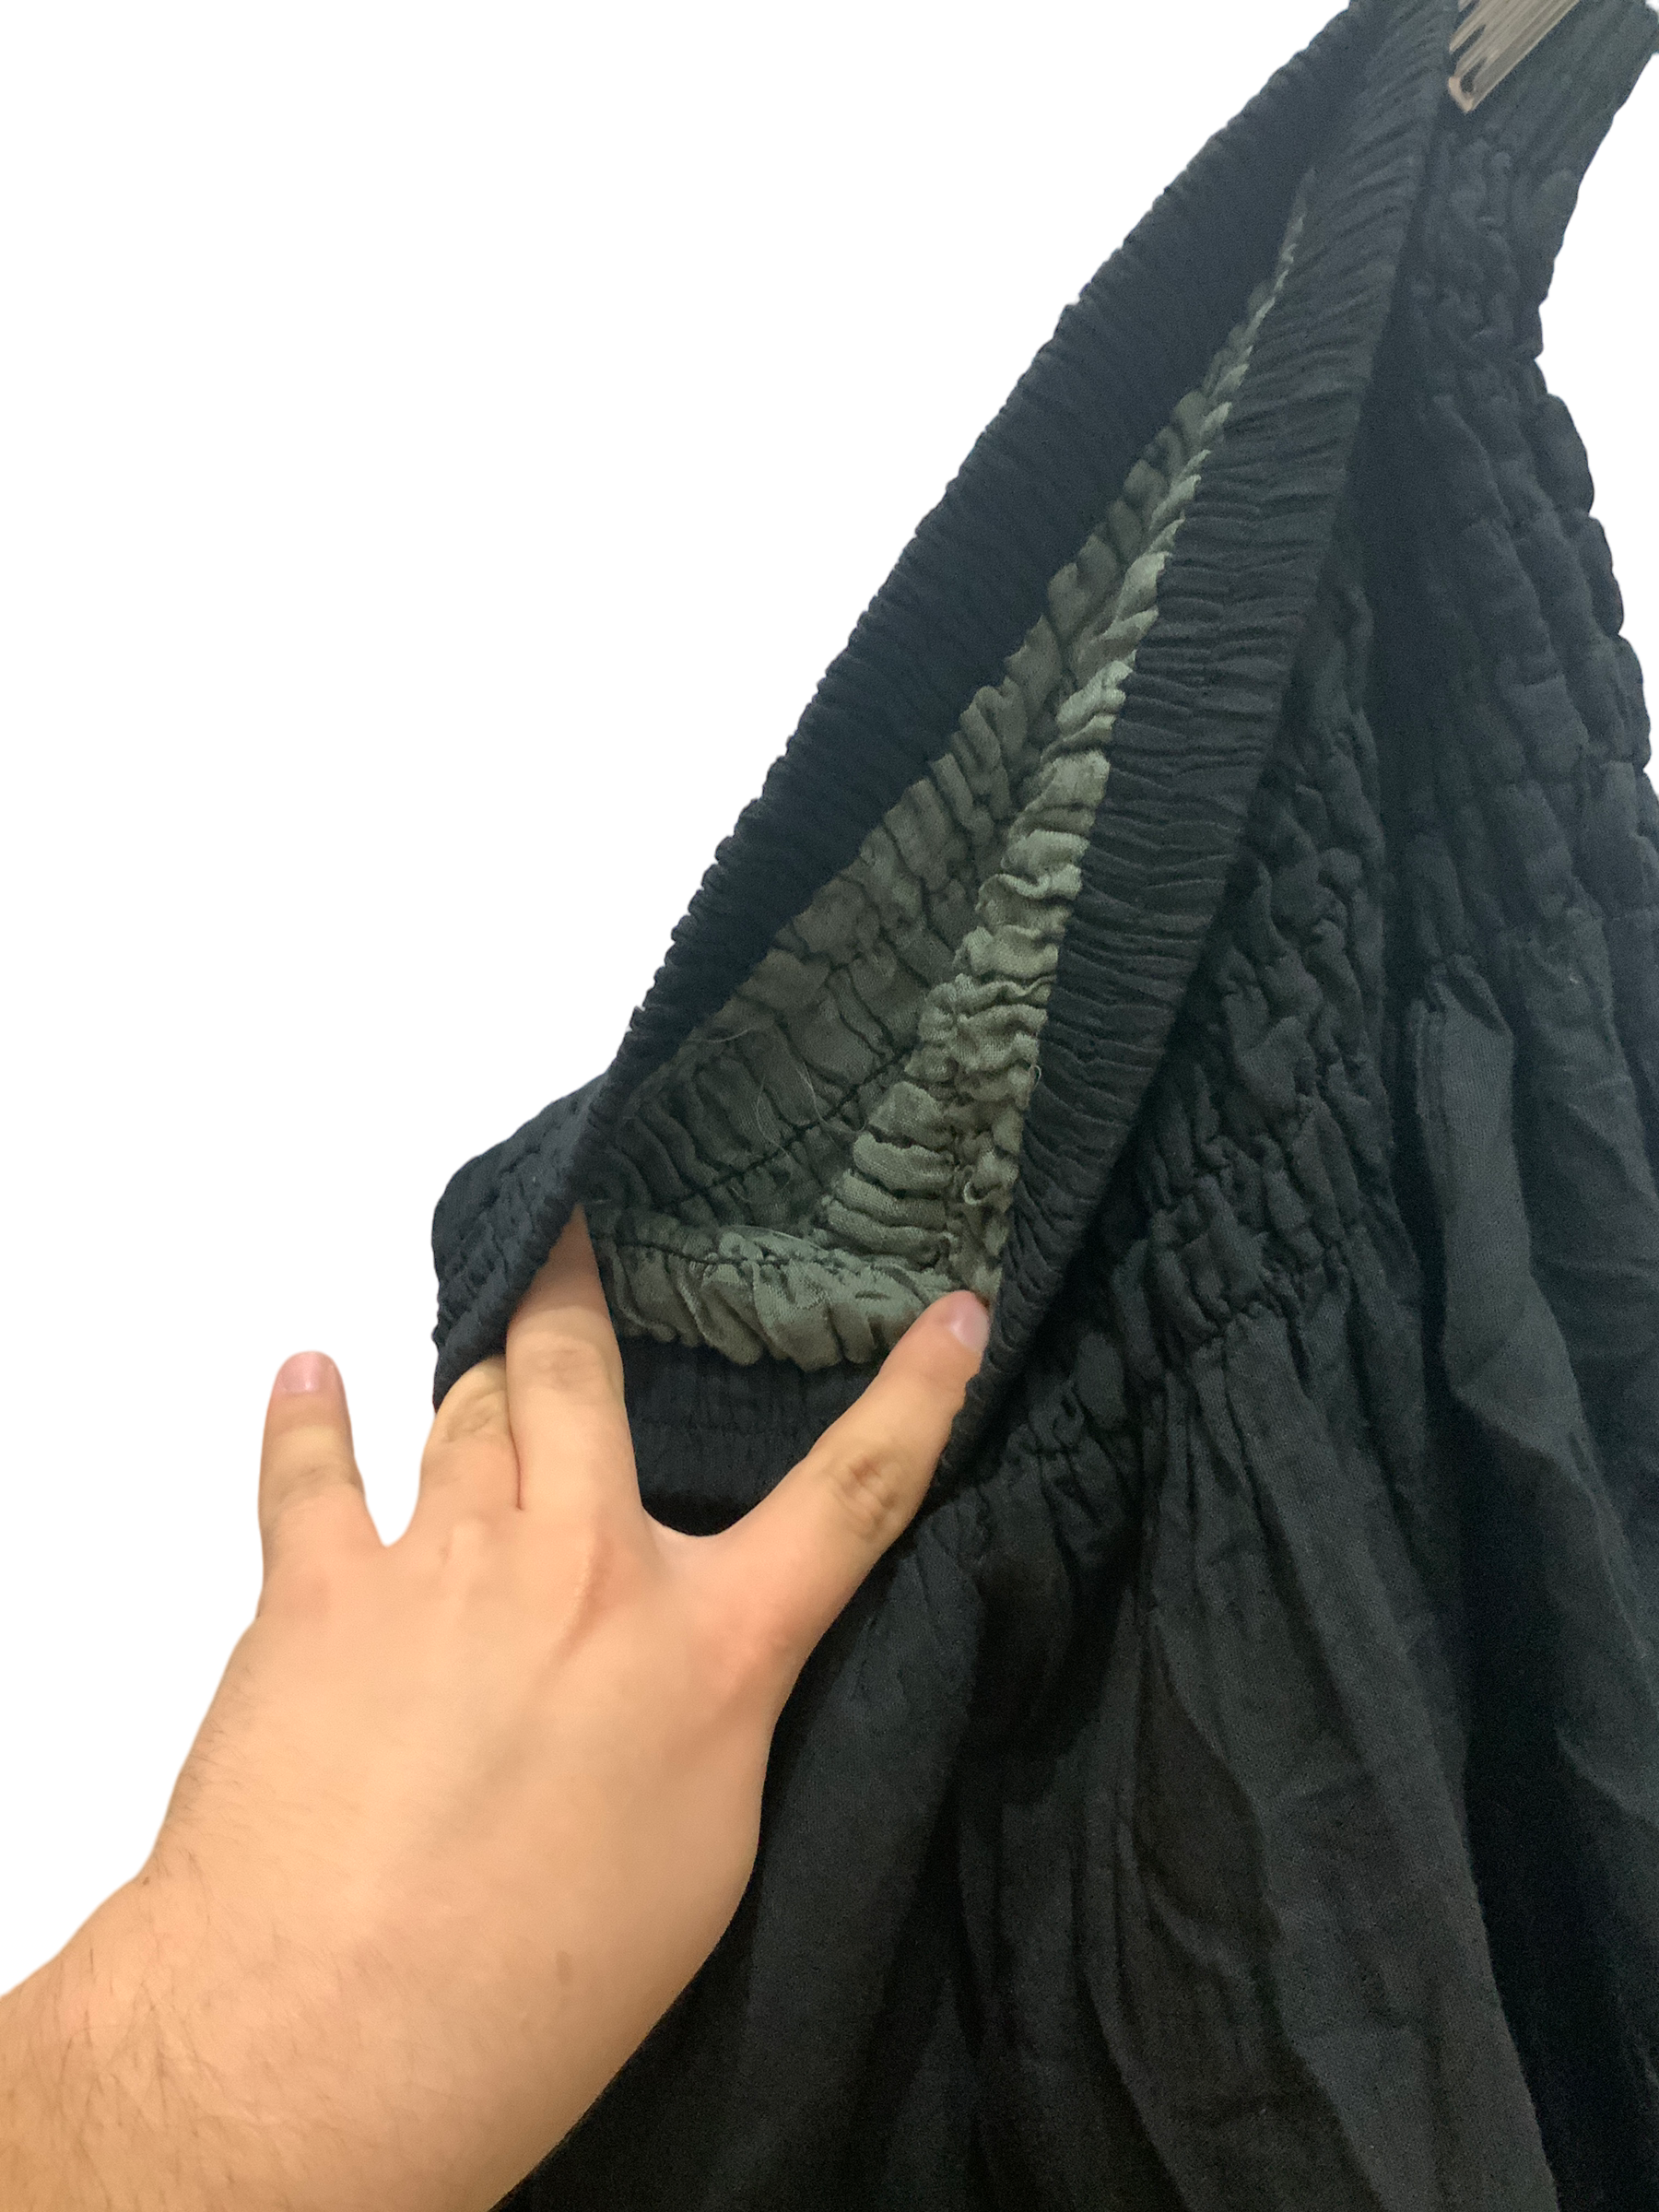 Black Cotton Voile Tiered Skirt